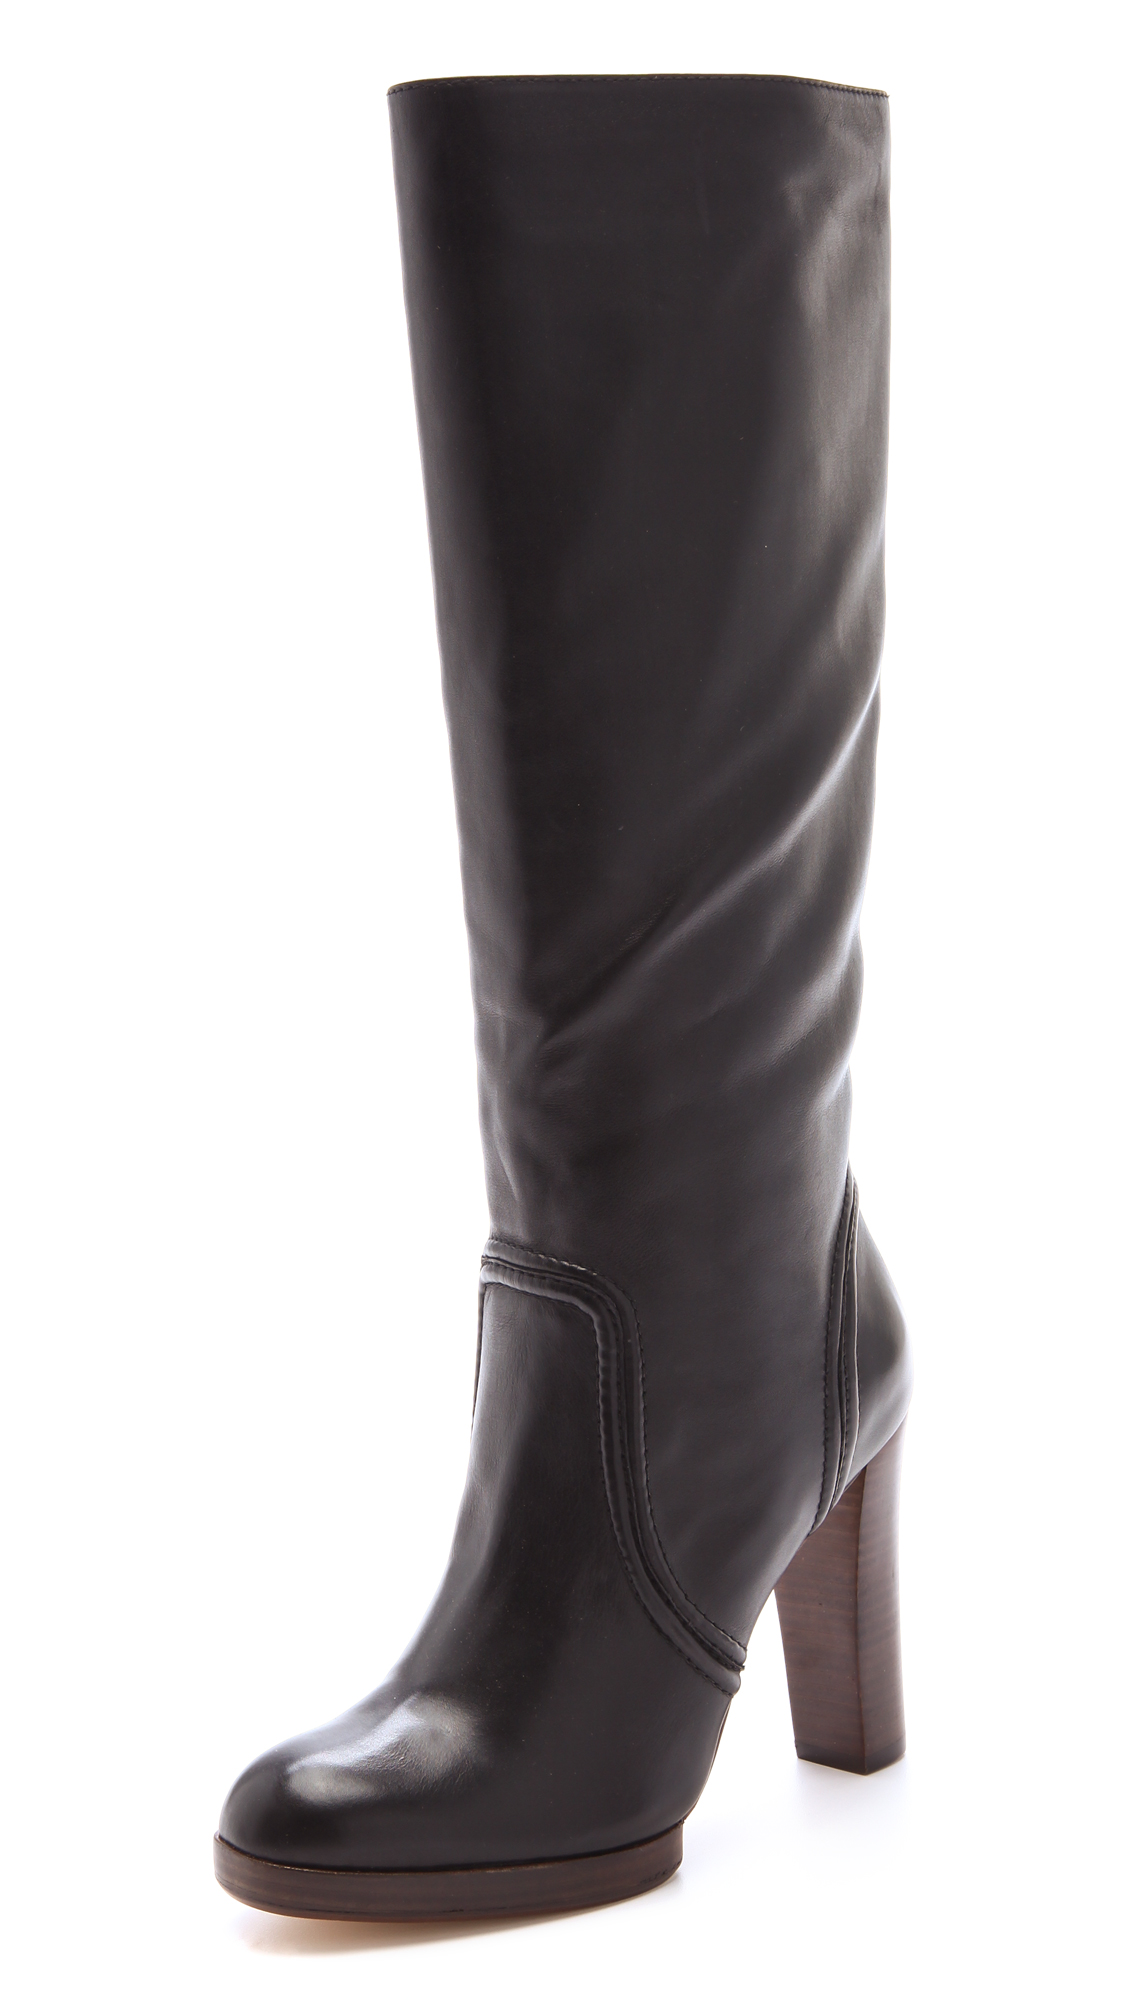 Lyst - Kors By Michael Kors Aila High Heel Boots in Black